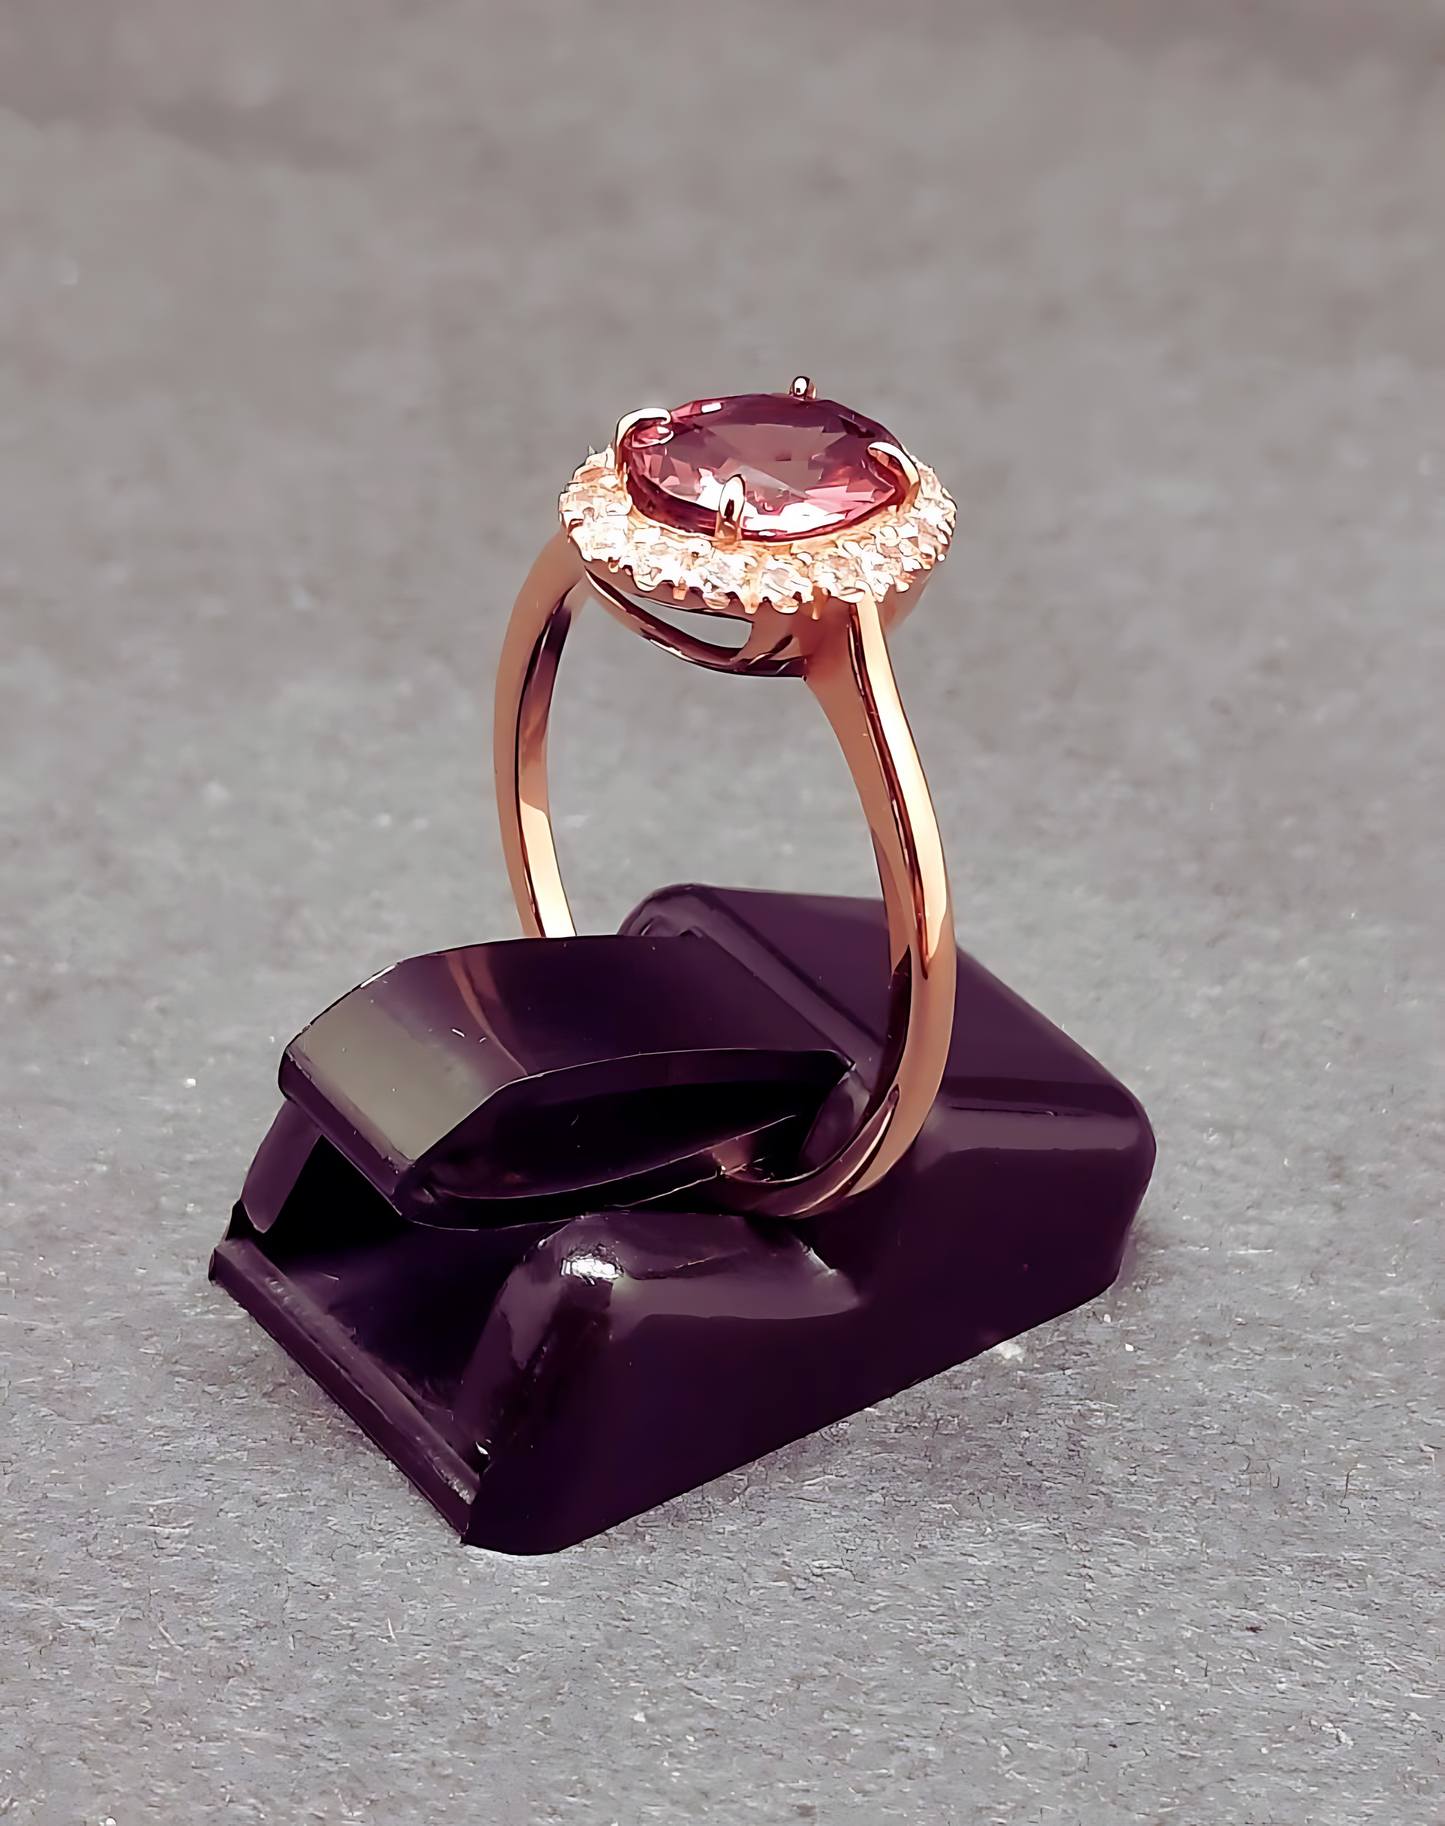 Handmade 18K rose gold ring with 1.67 ct. natural rose Garnet & natural Vvs1 high quality Diamonds.